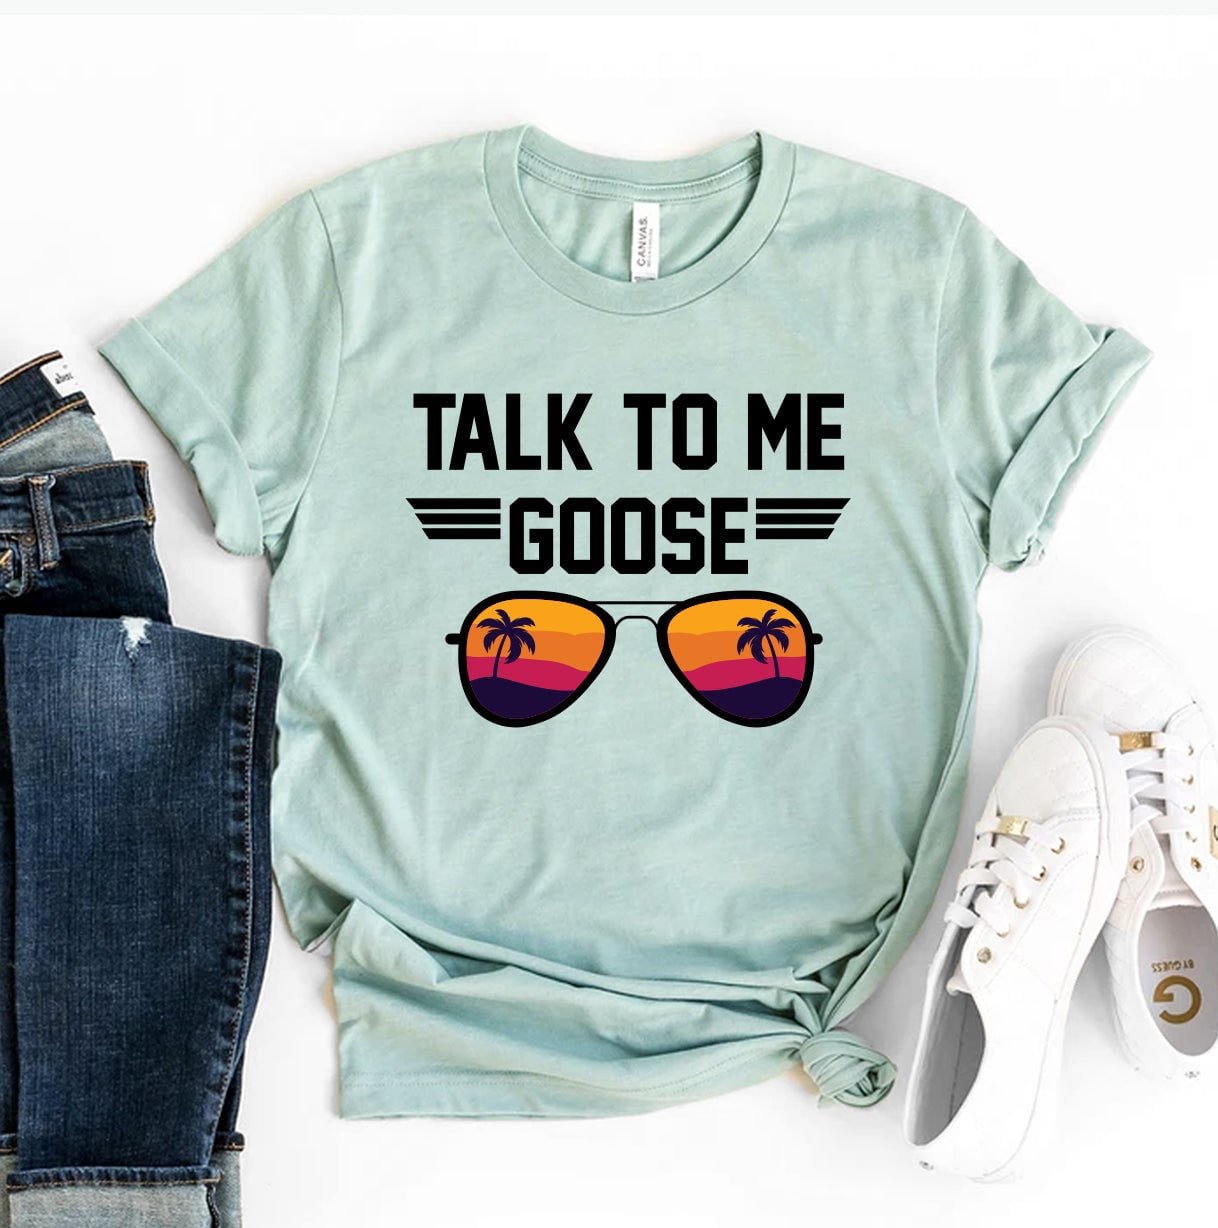 Talk To Me Goose T-shirt Military Tshirt Humor Top Women's Funny Shirt  Sunglasses Shirts Sarcastic Tee Top Gun Gift 